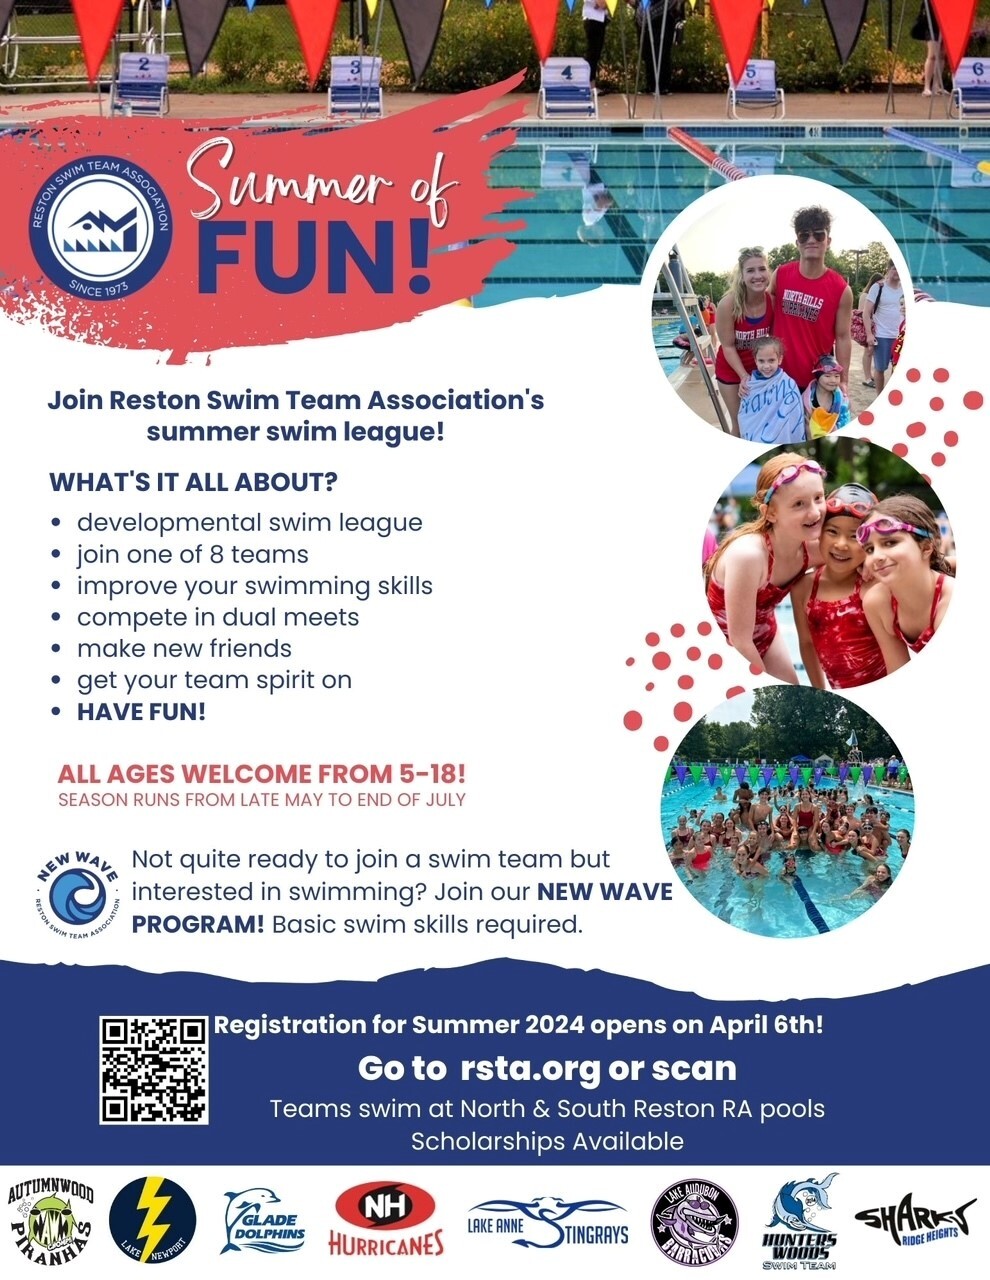 Reston Swim Team Association's Summer Swim League 